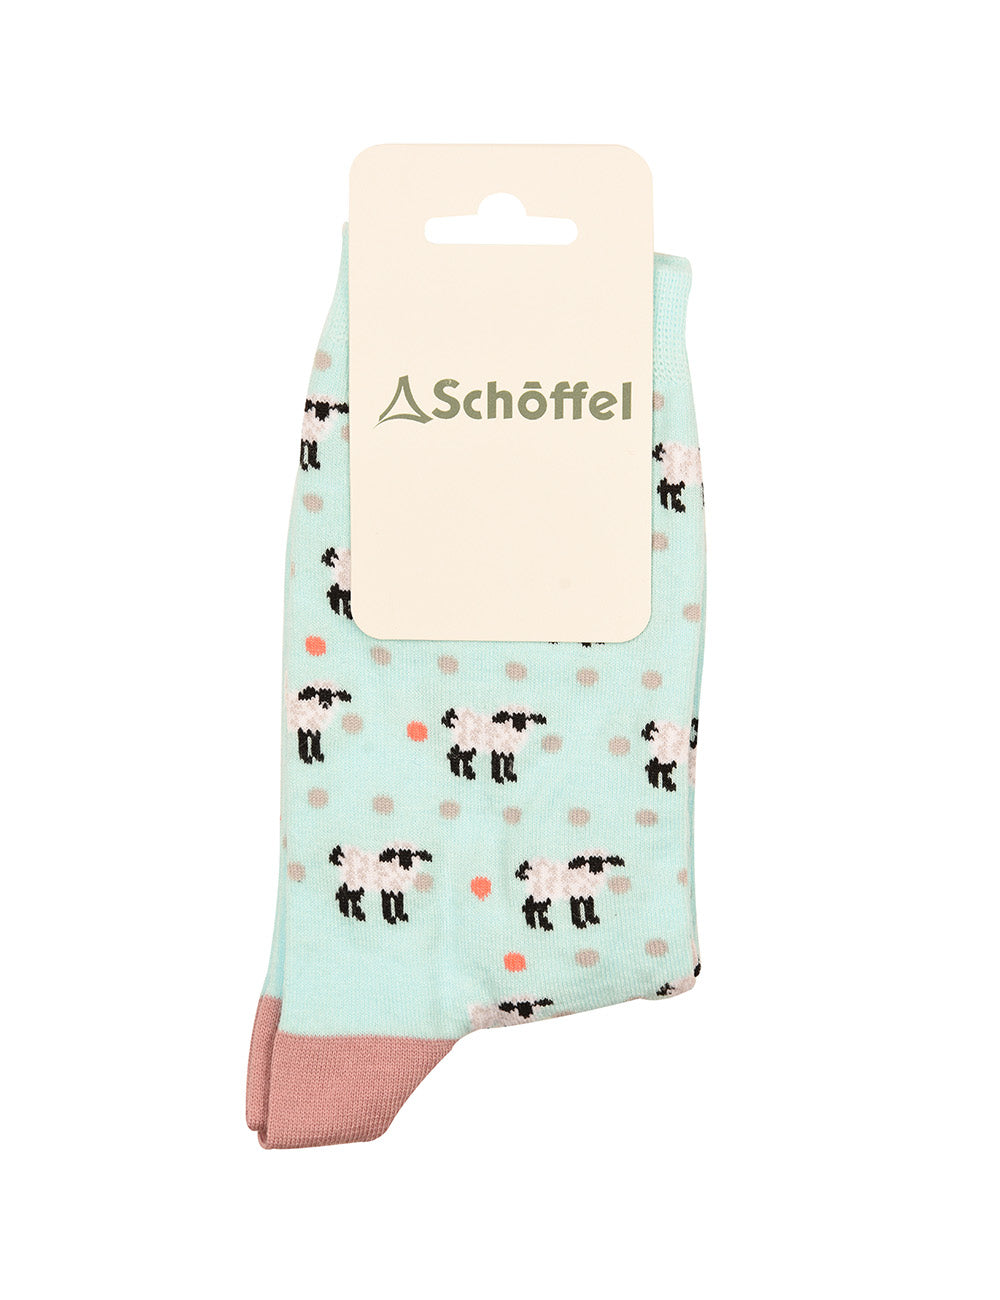 Schoffel Cotton Socks - Mint Sheep